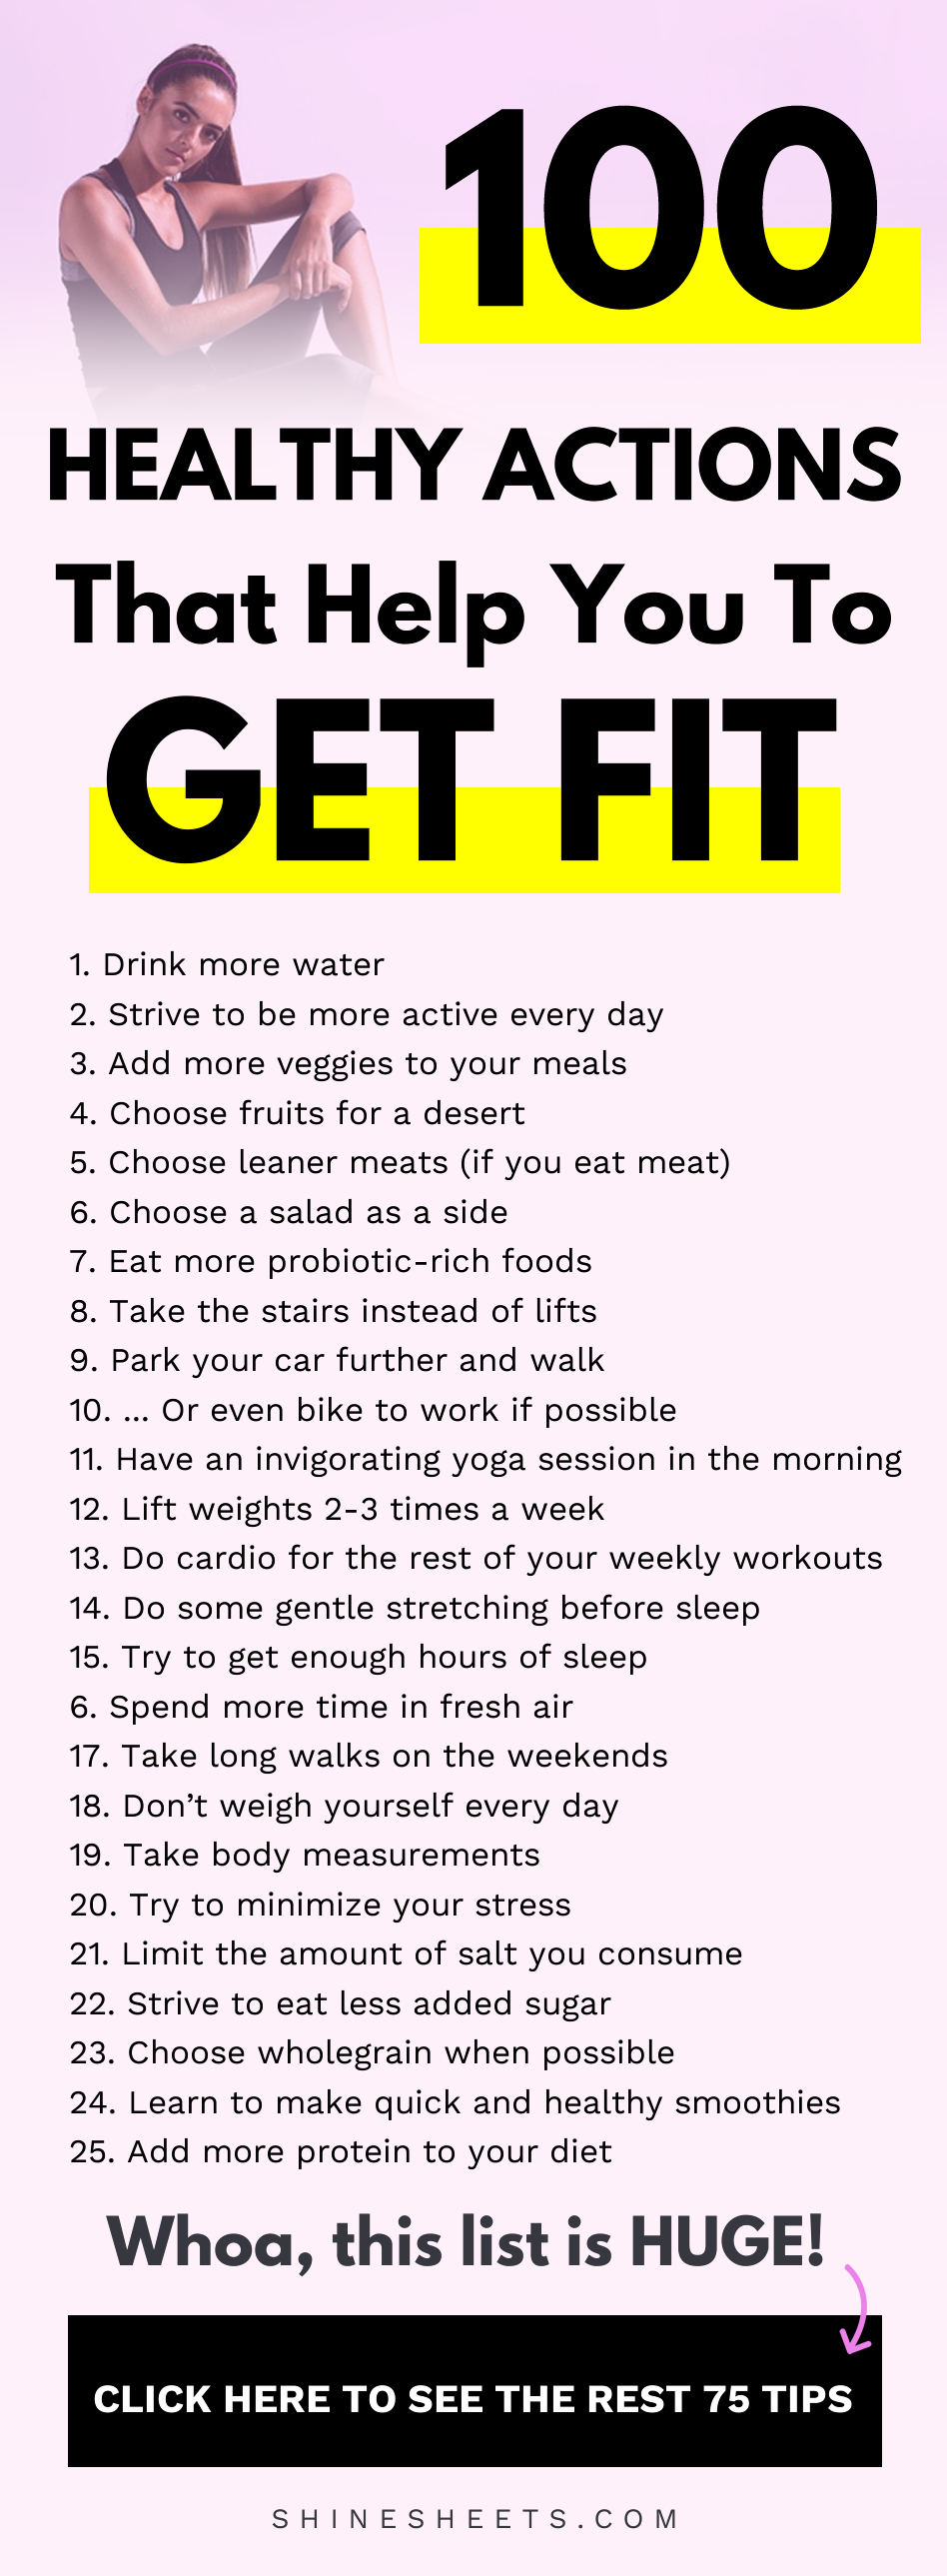 18 fitness Lifestyle tips ideas